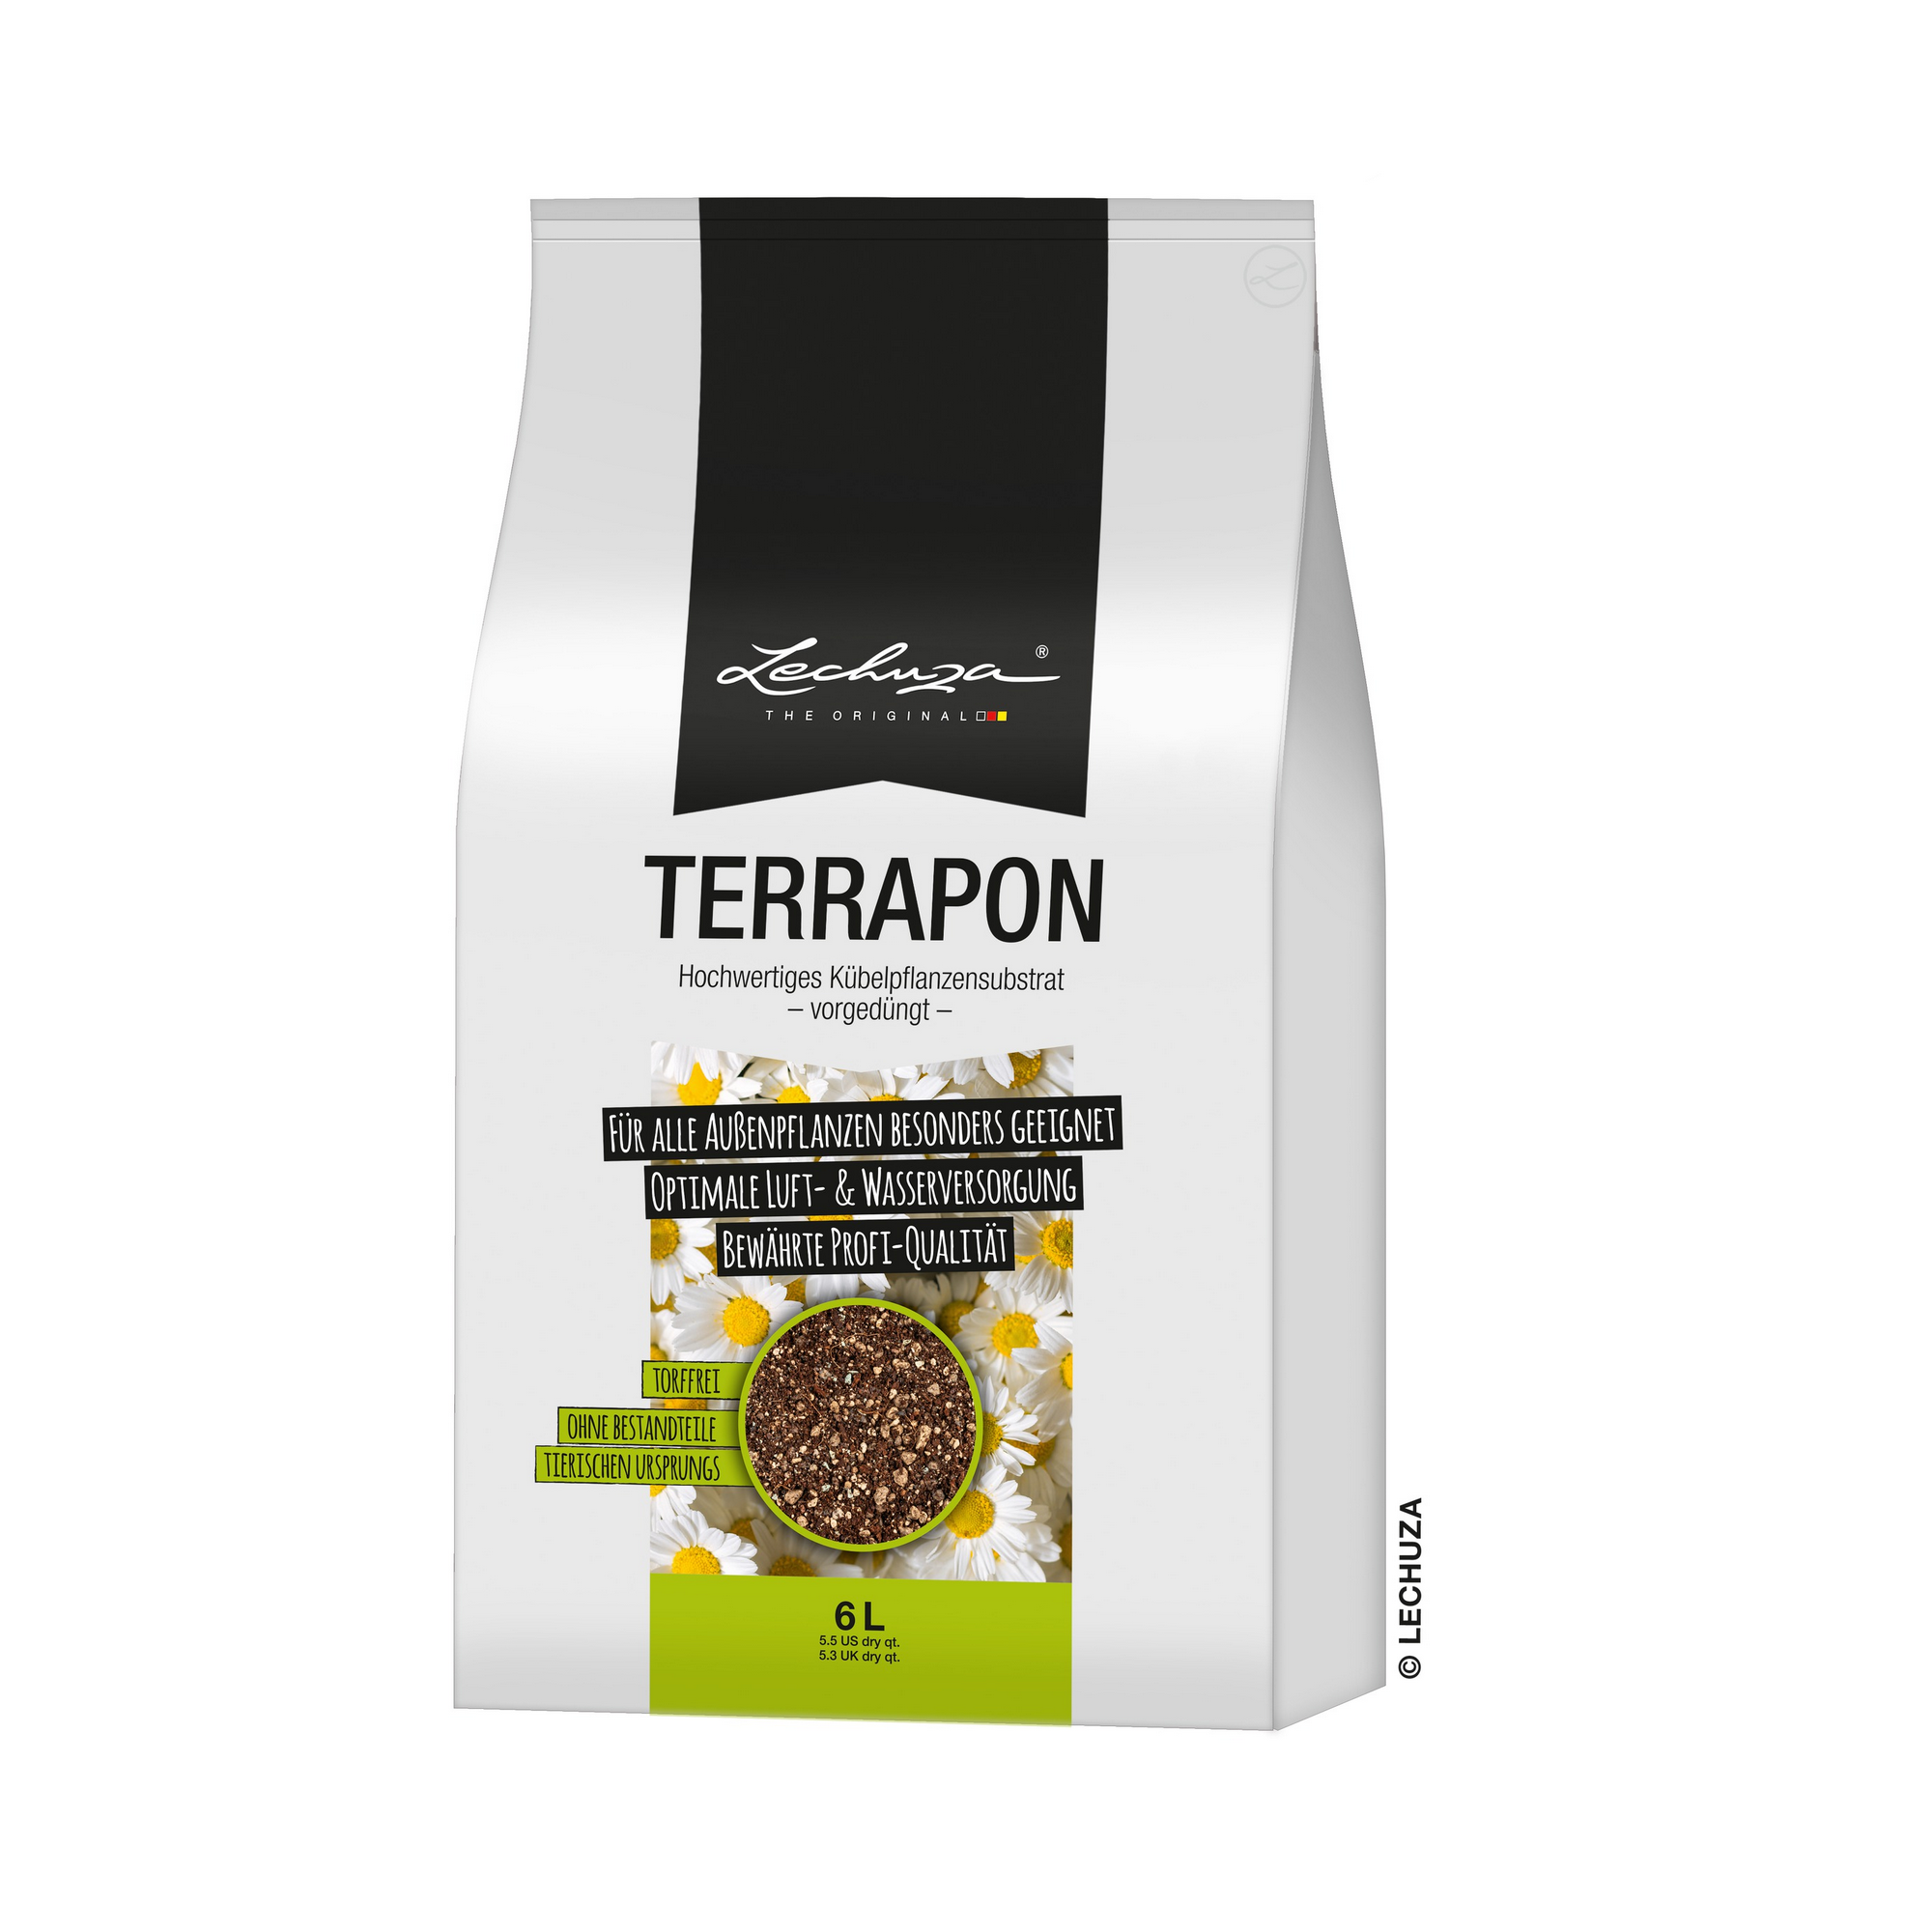 Pflanzenerde 'Terrapon' 6 Liter + product picture